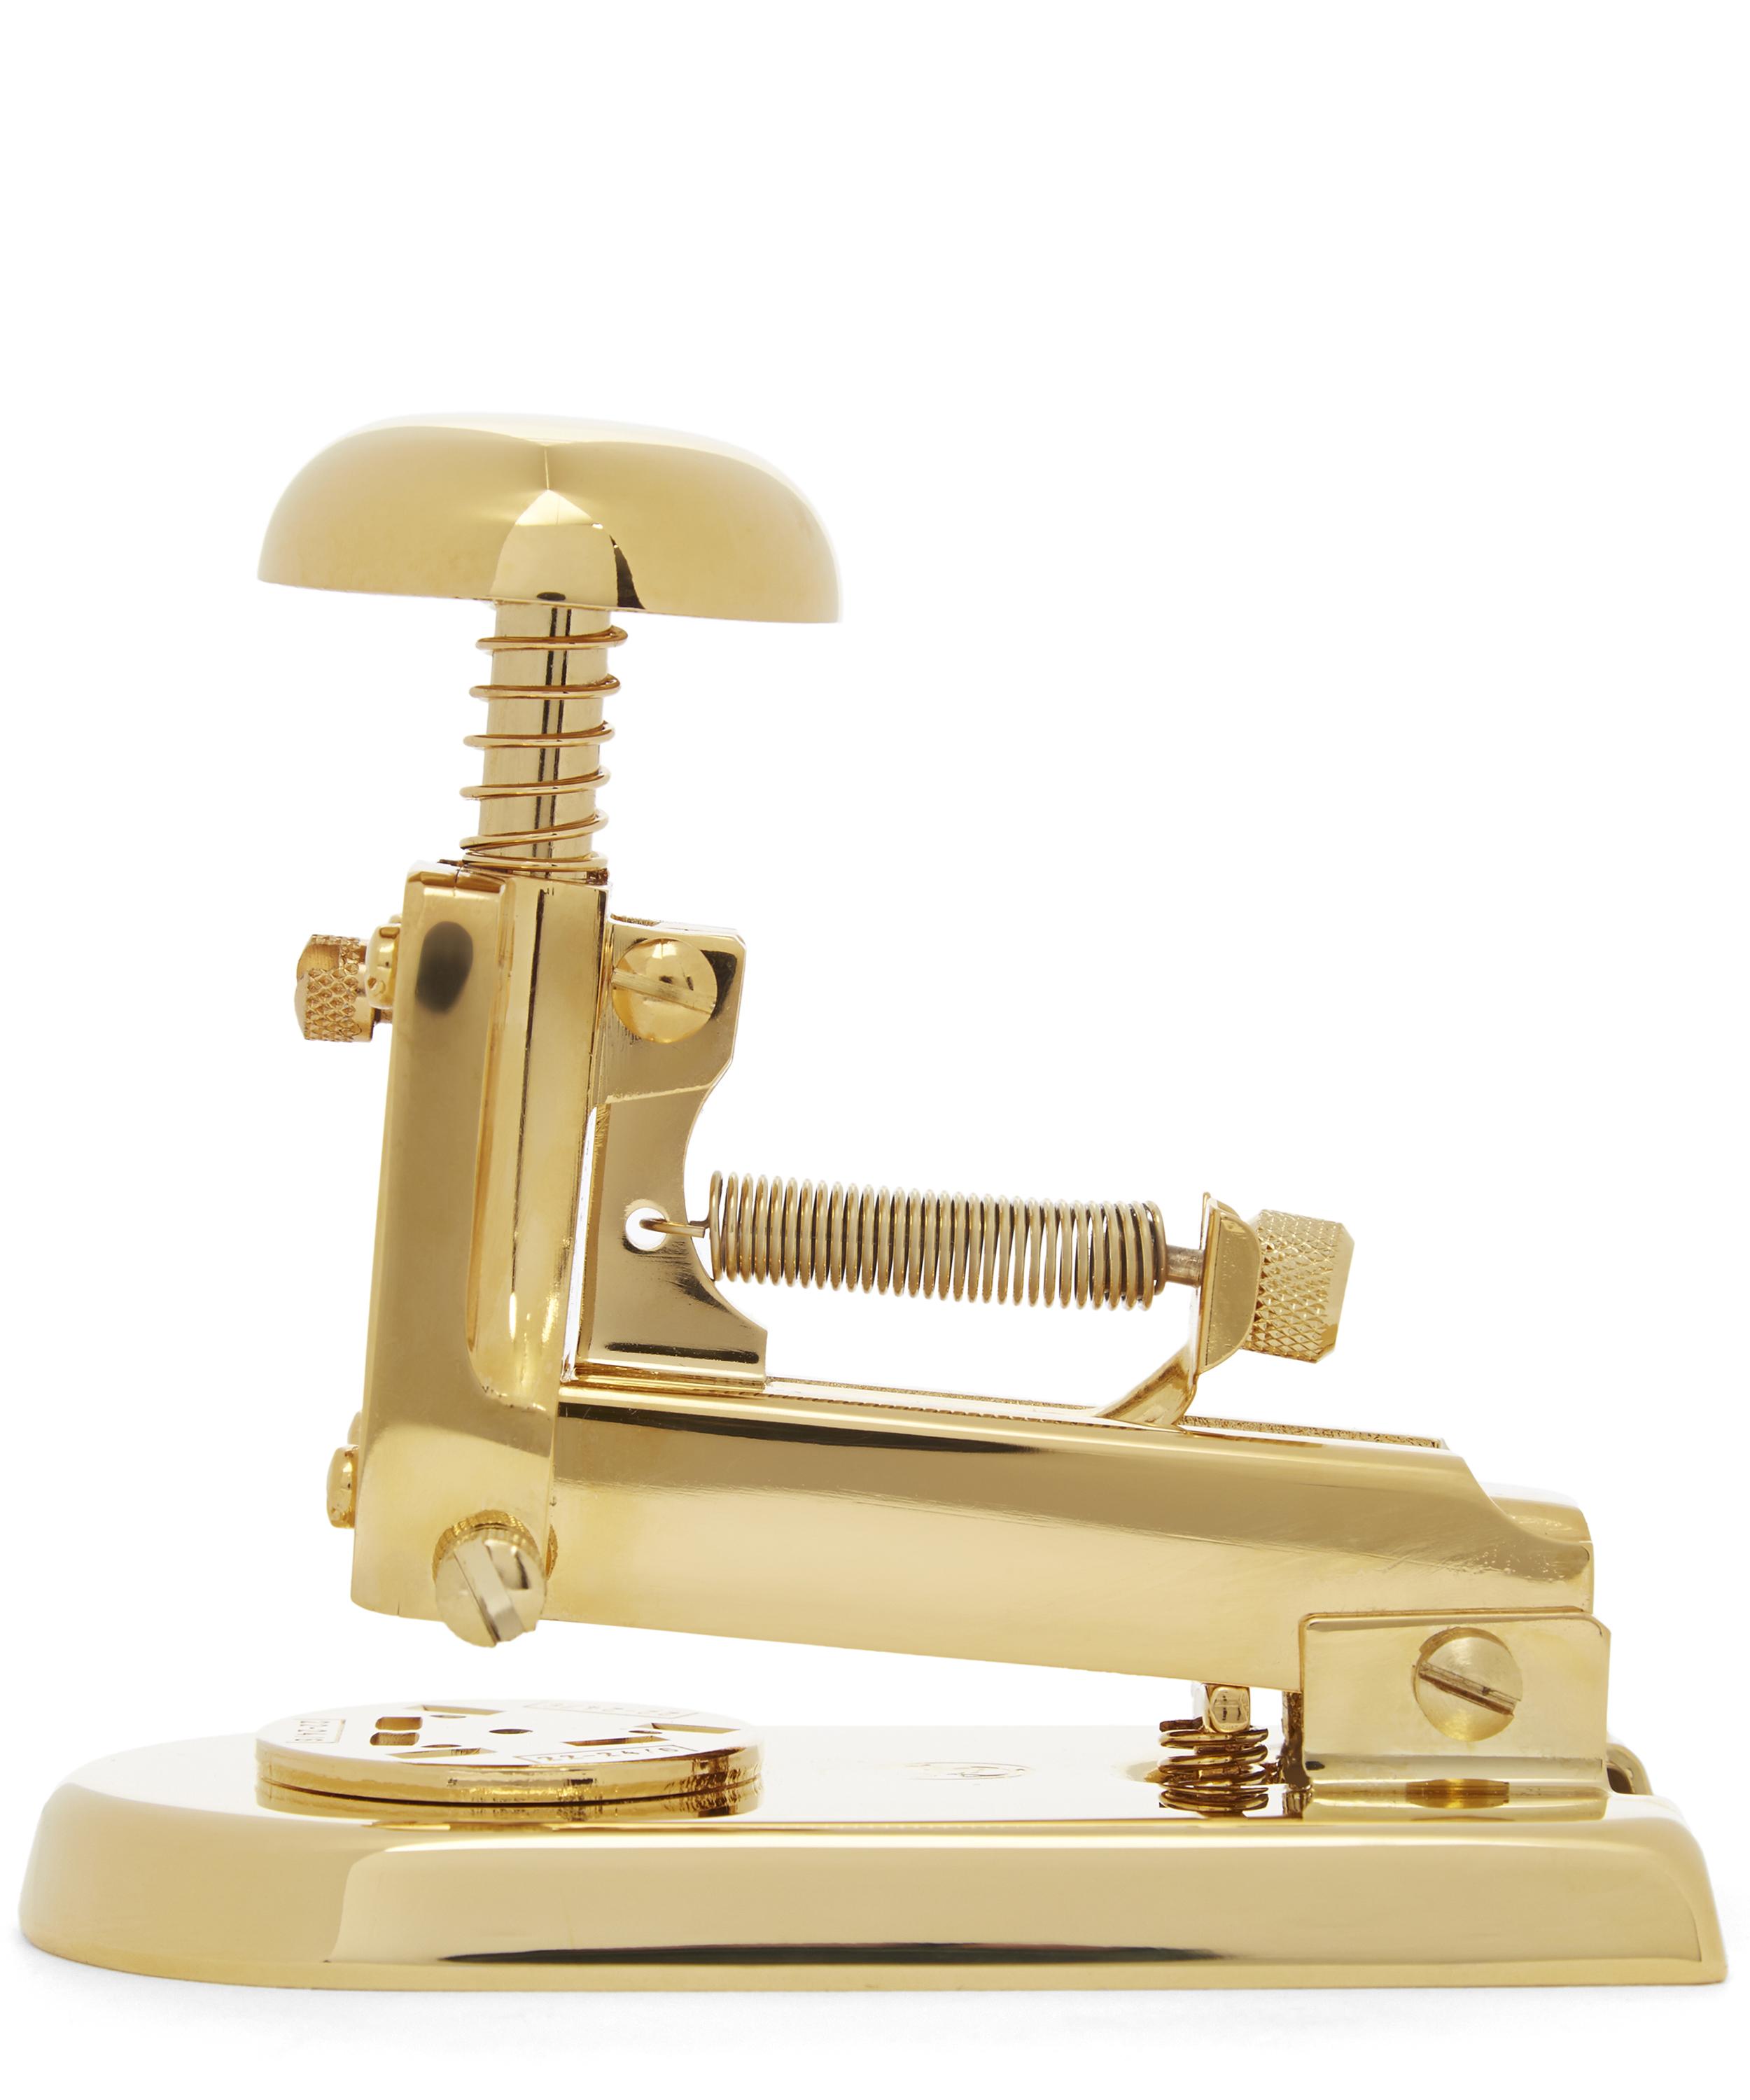 M5 Gold Plated Desk Stapler Liberty London